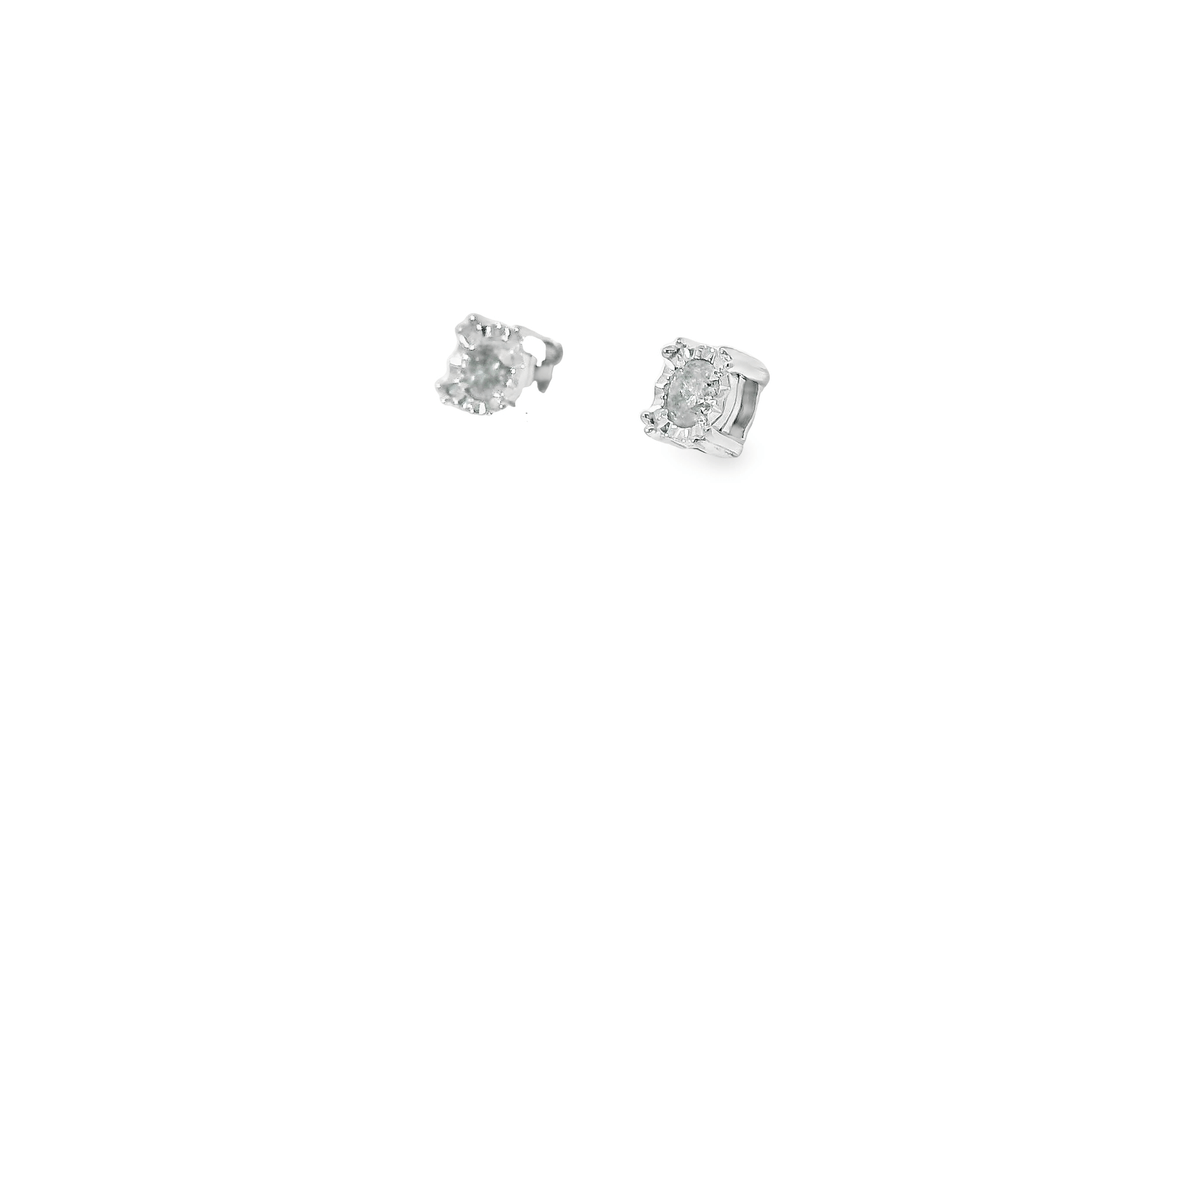 10k Gold Diamond Illusion Stud Earrings - The Real Jewelry CompanyThe Real Jewelry CompanyEarrings